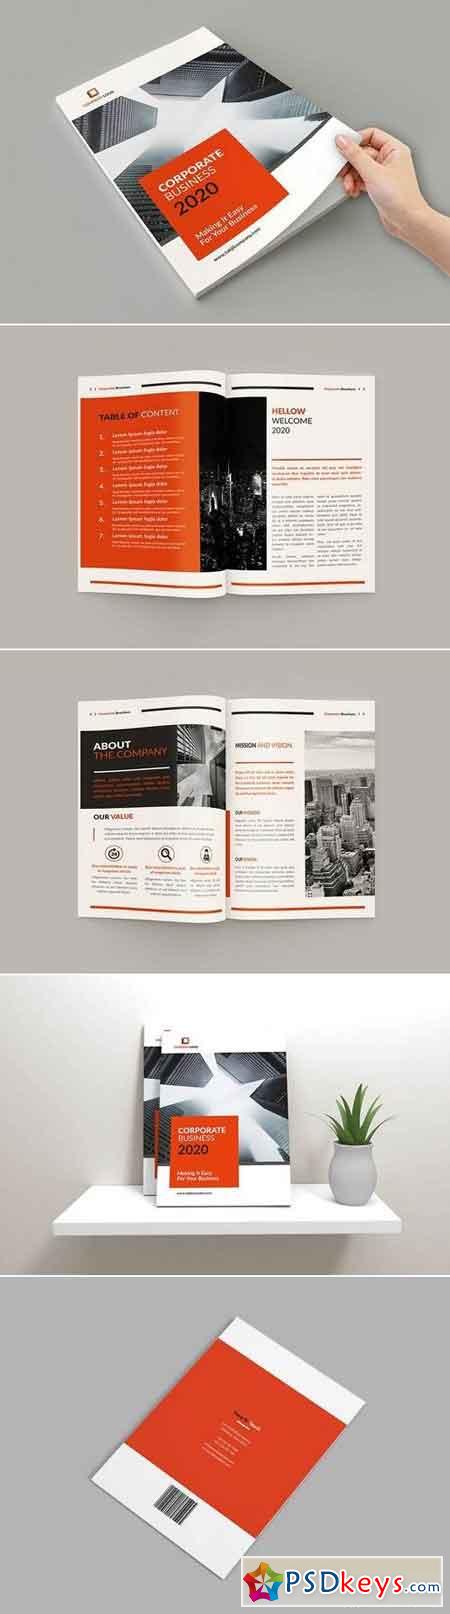 Samawa - A4 Business Corporate Brochure Template